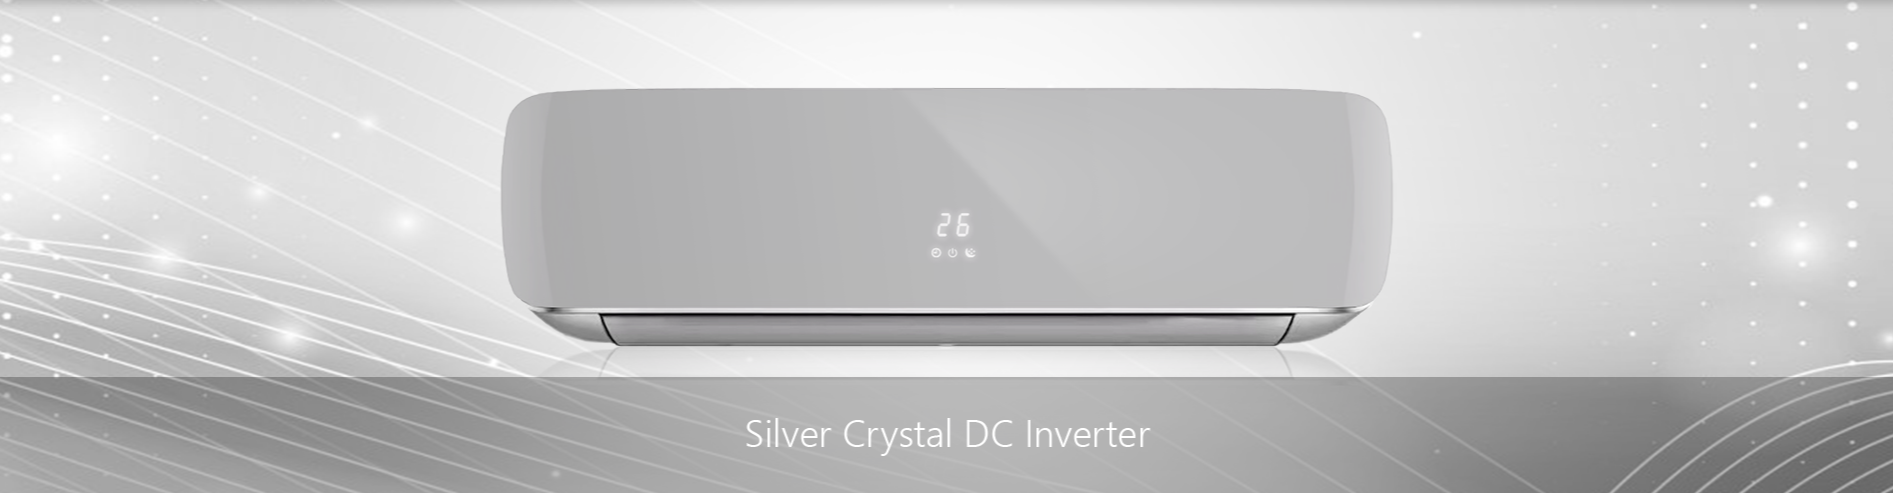 Hisense CRYSTAL SILVER DC Inverter